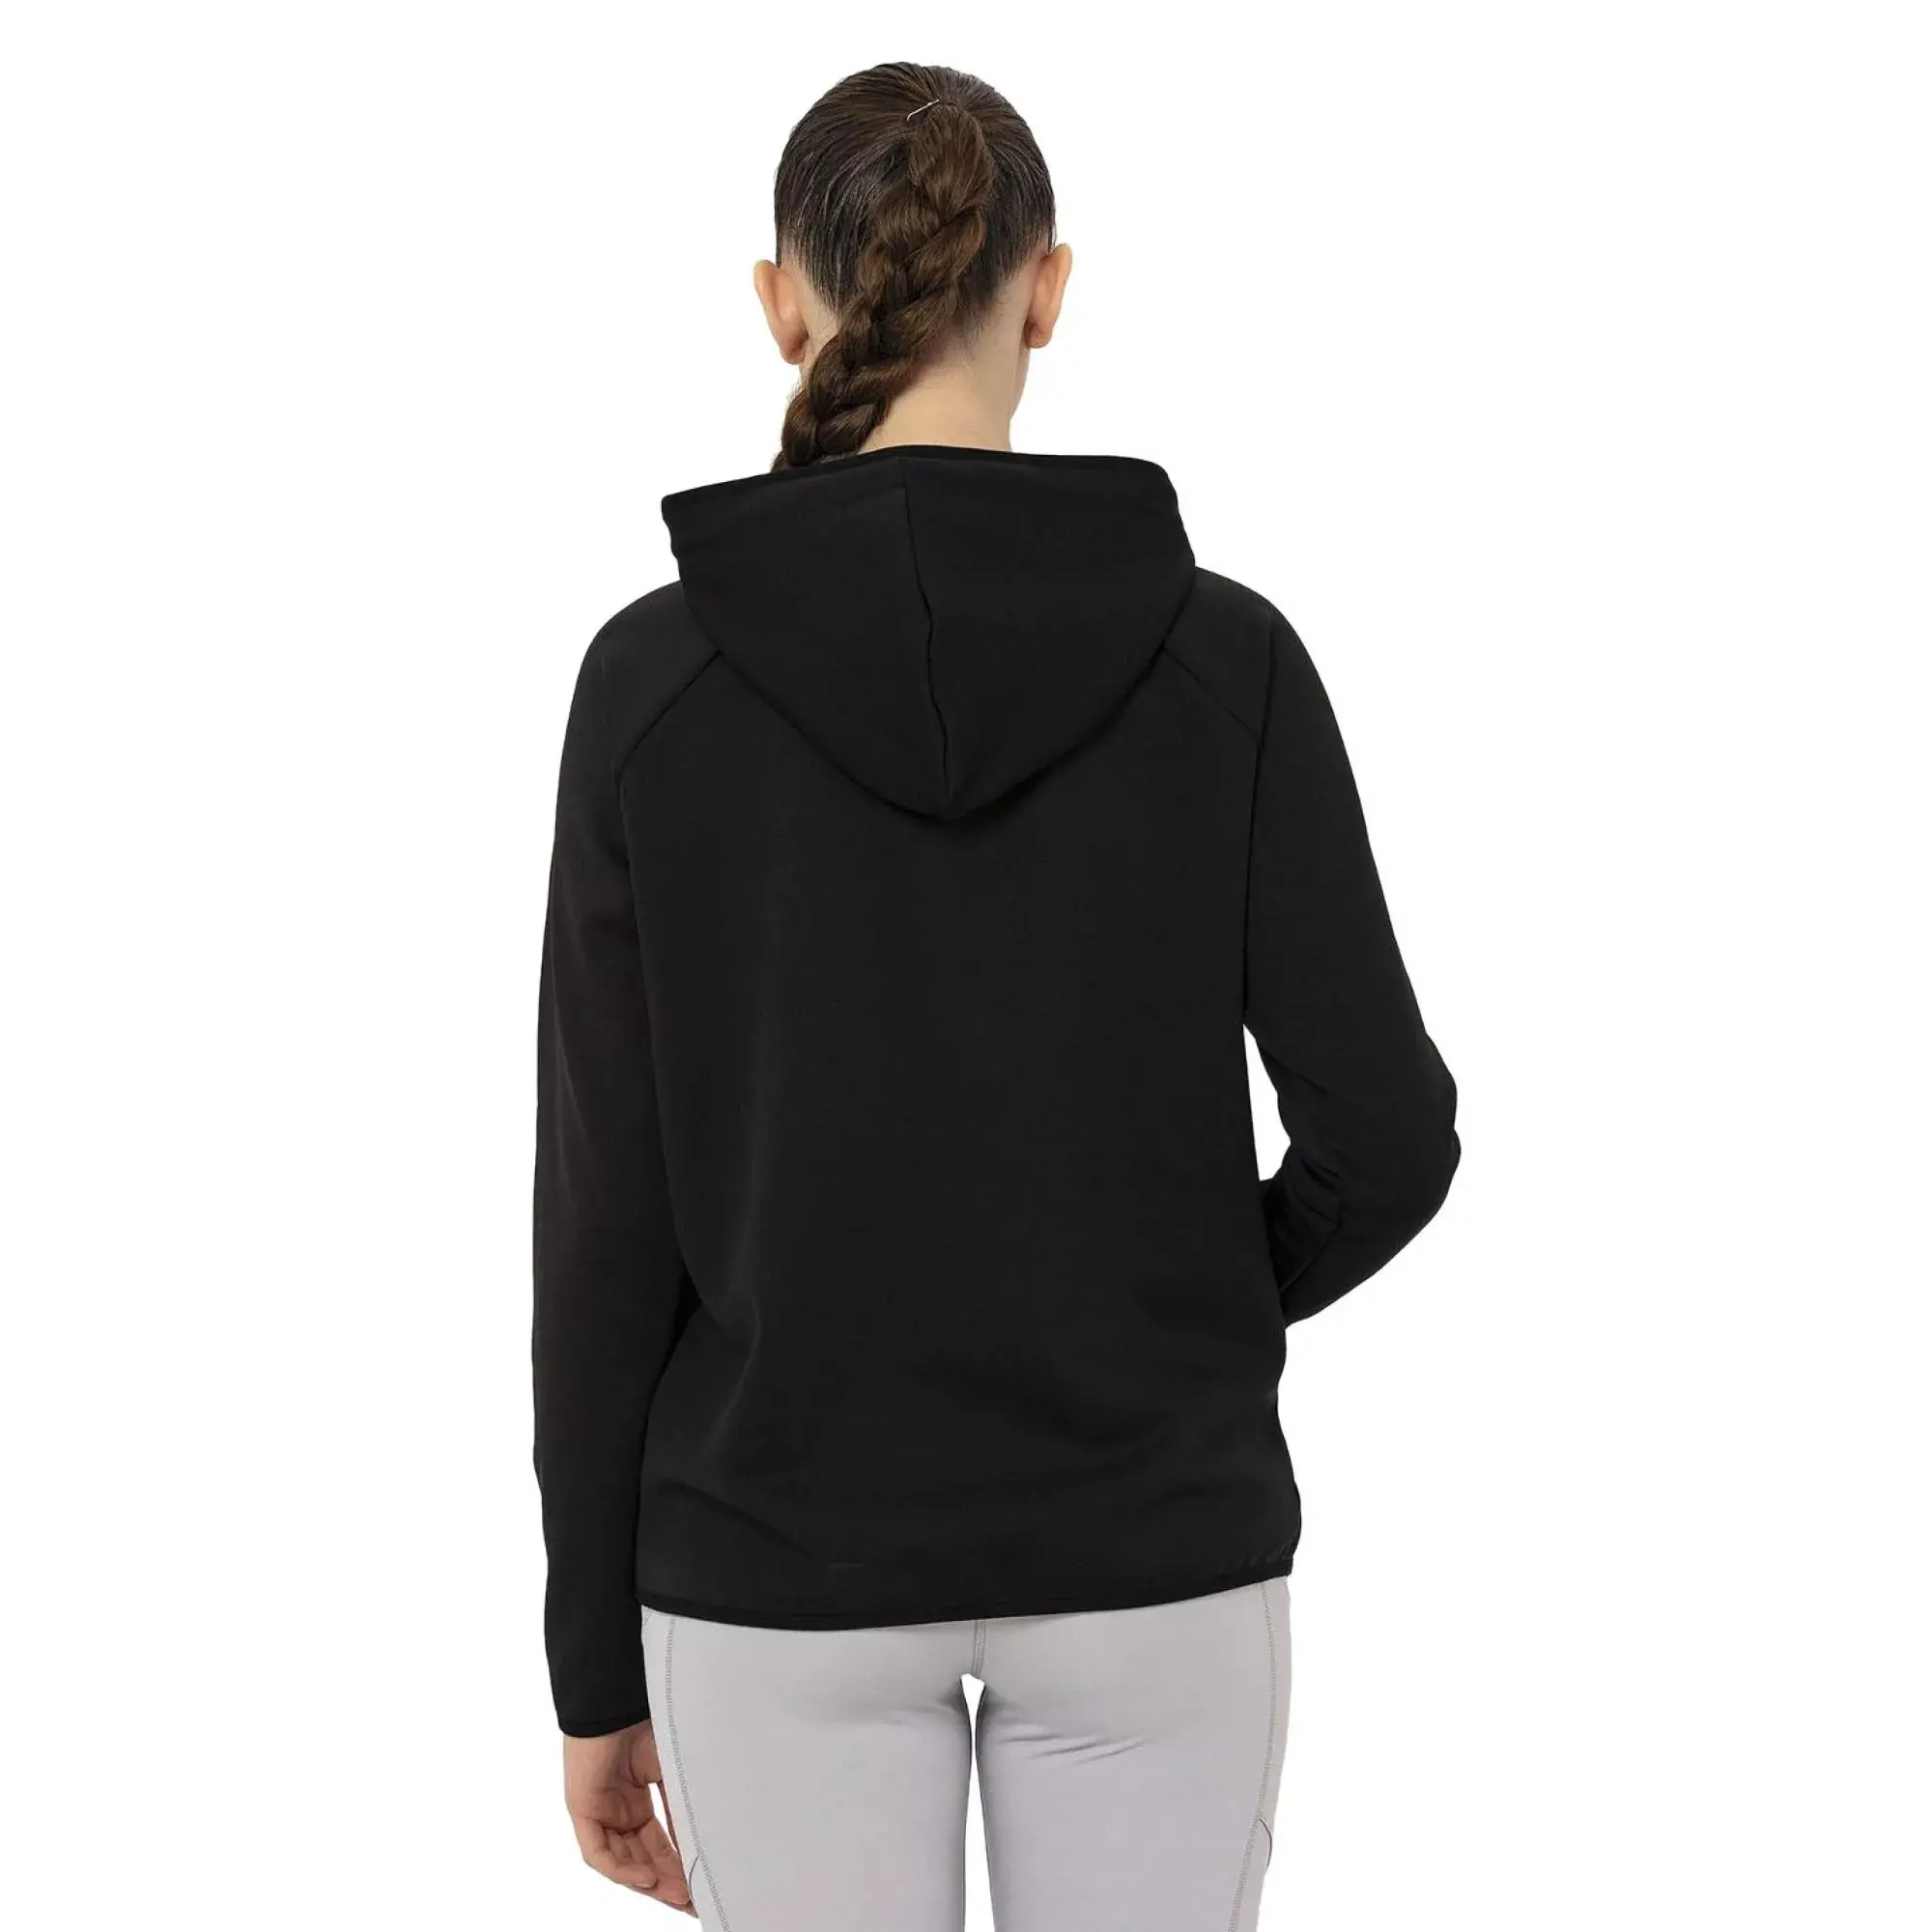 Merrell M23Symone Outdoor Tekstil Sweat Siyah Kadın Sweatshirt - 3